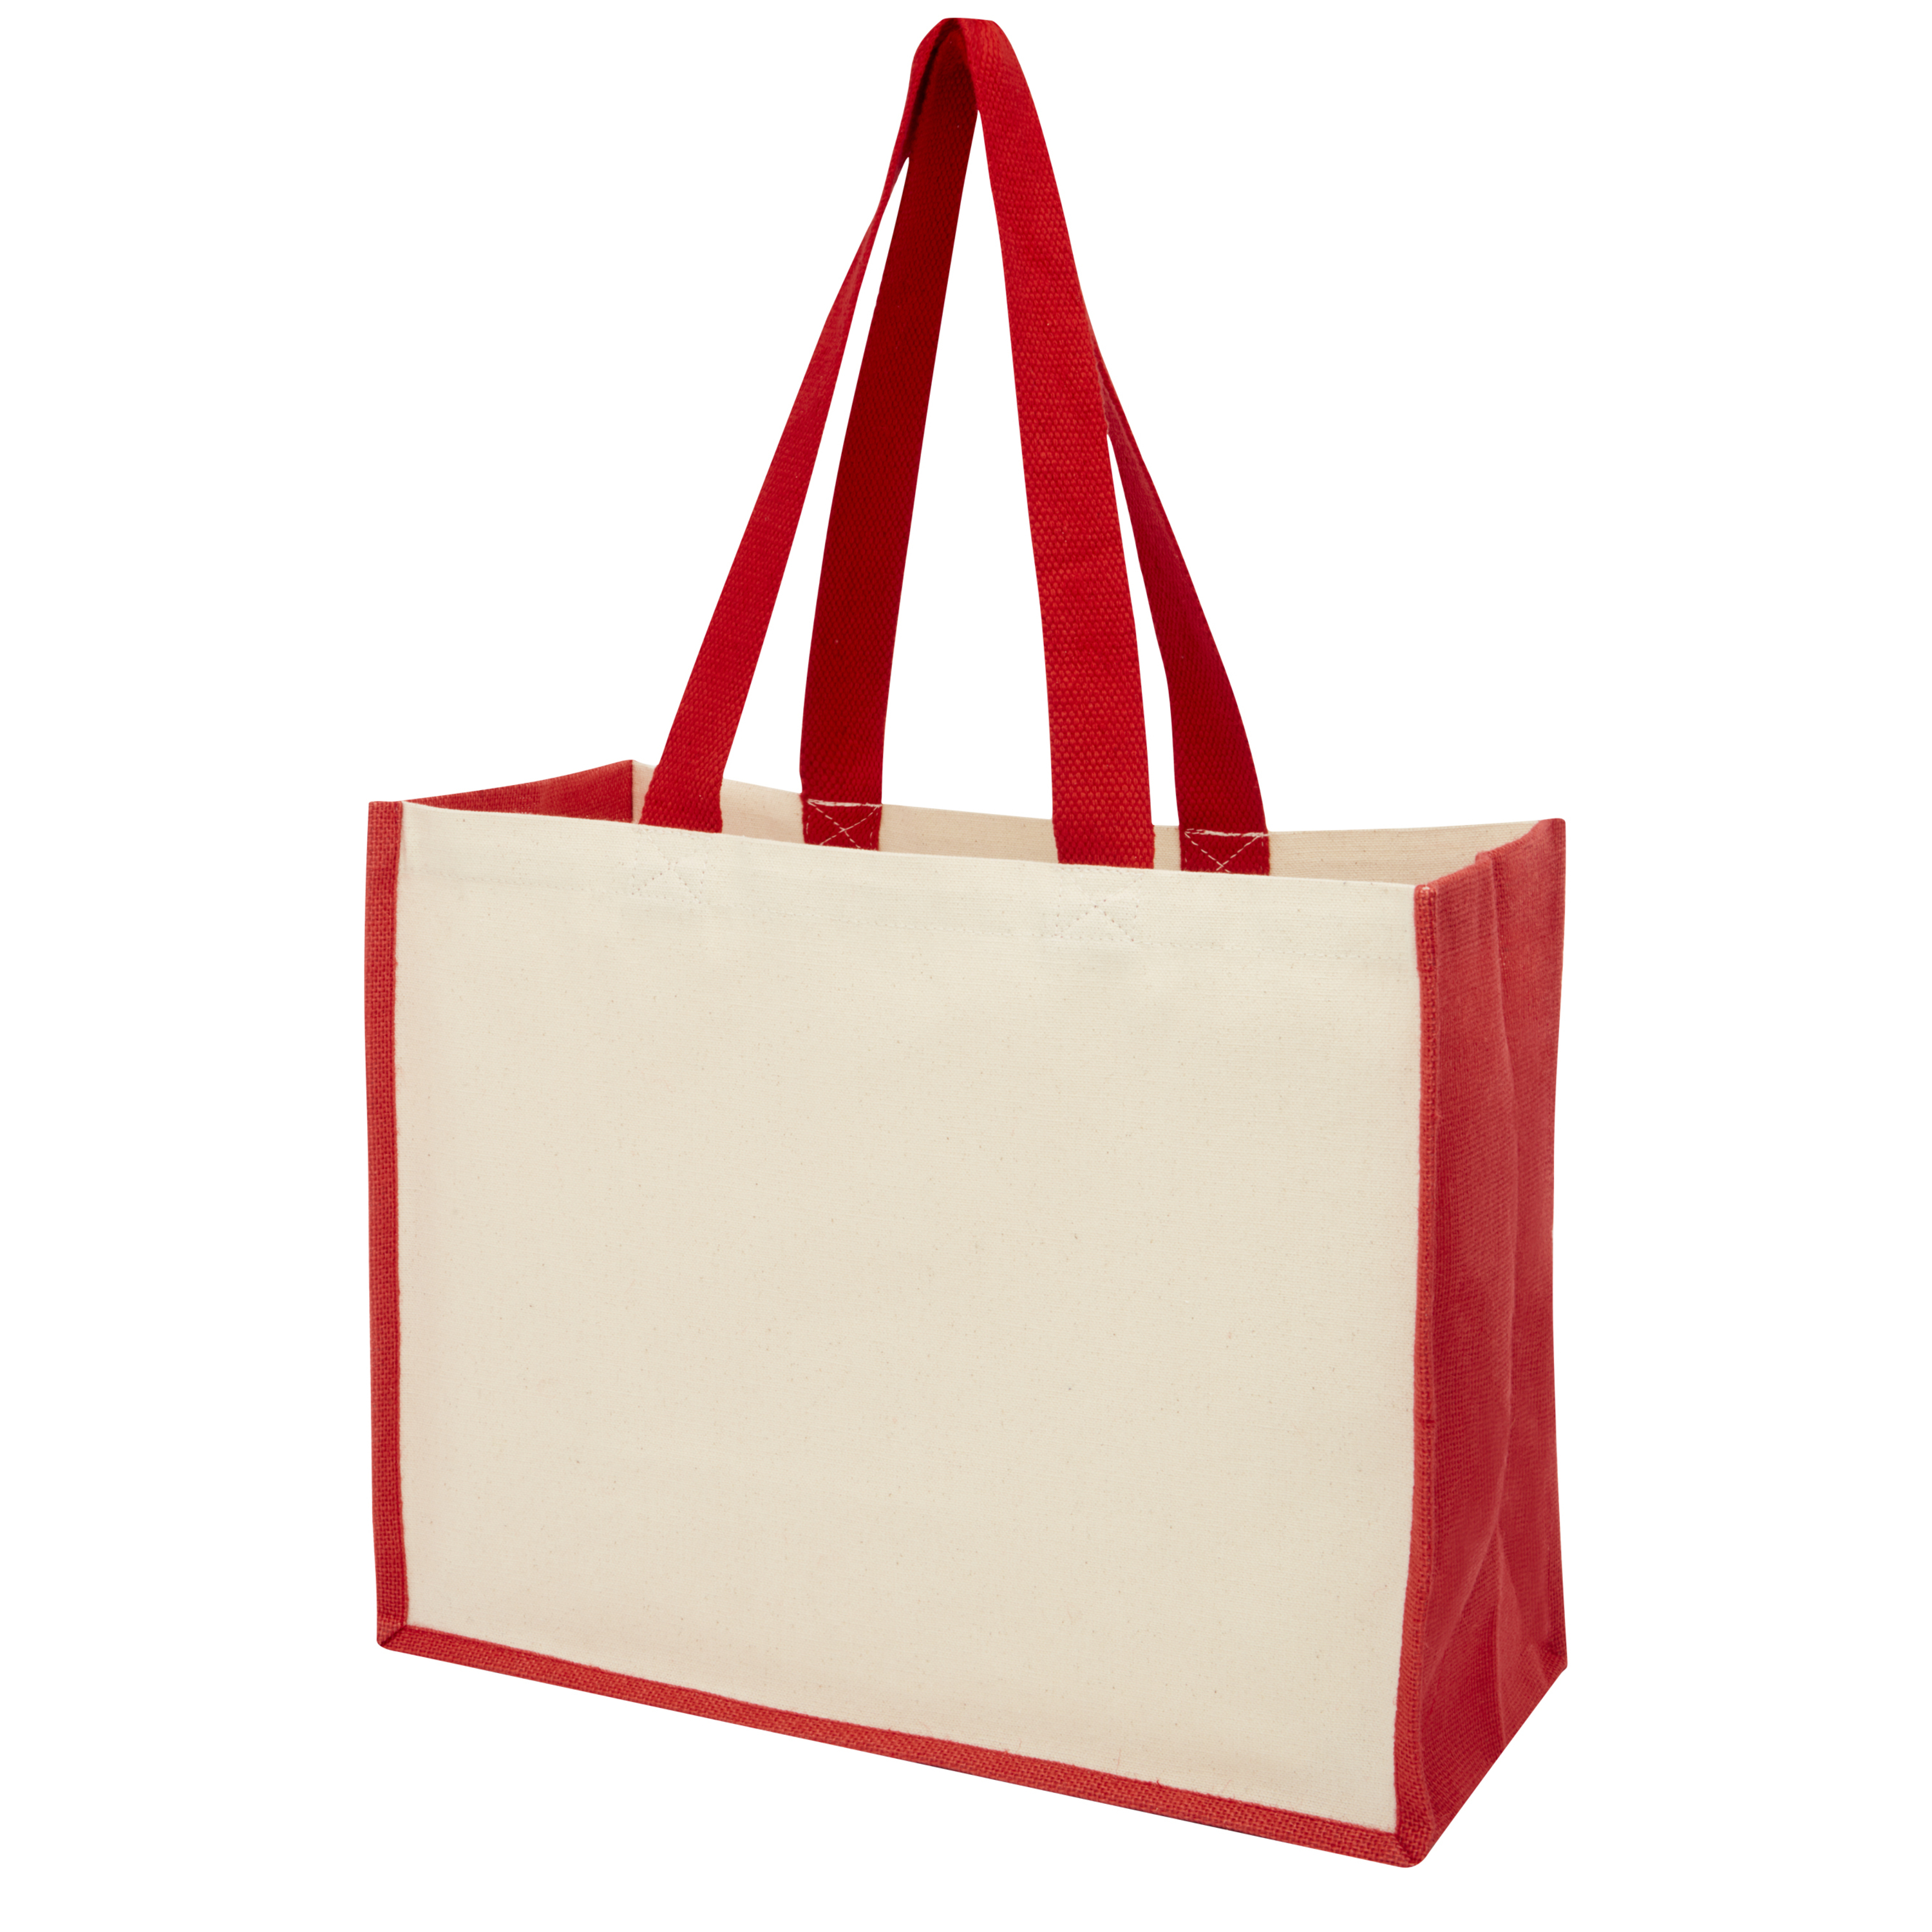 Varai 320 g/m² canvas and jute shopping tote bag 23L